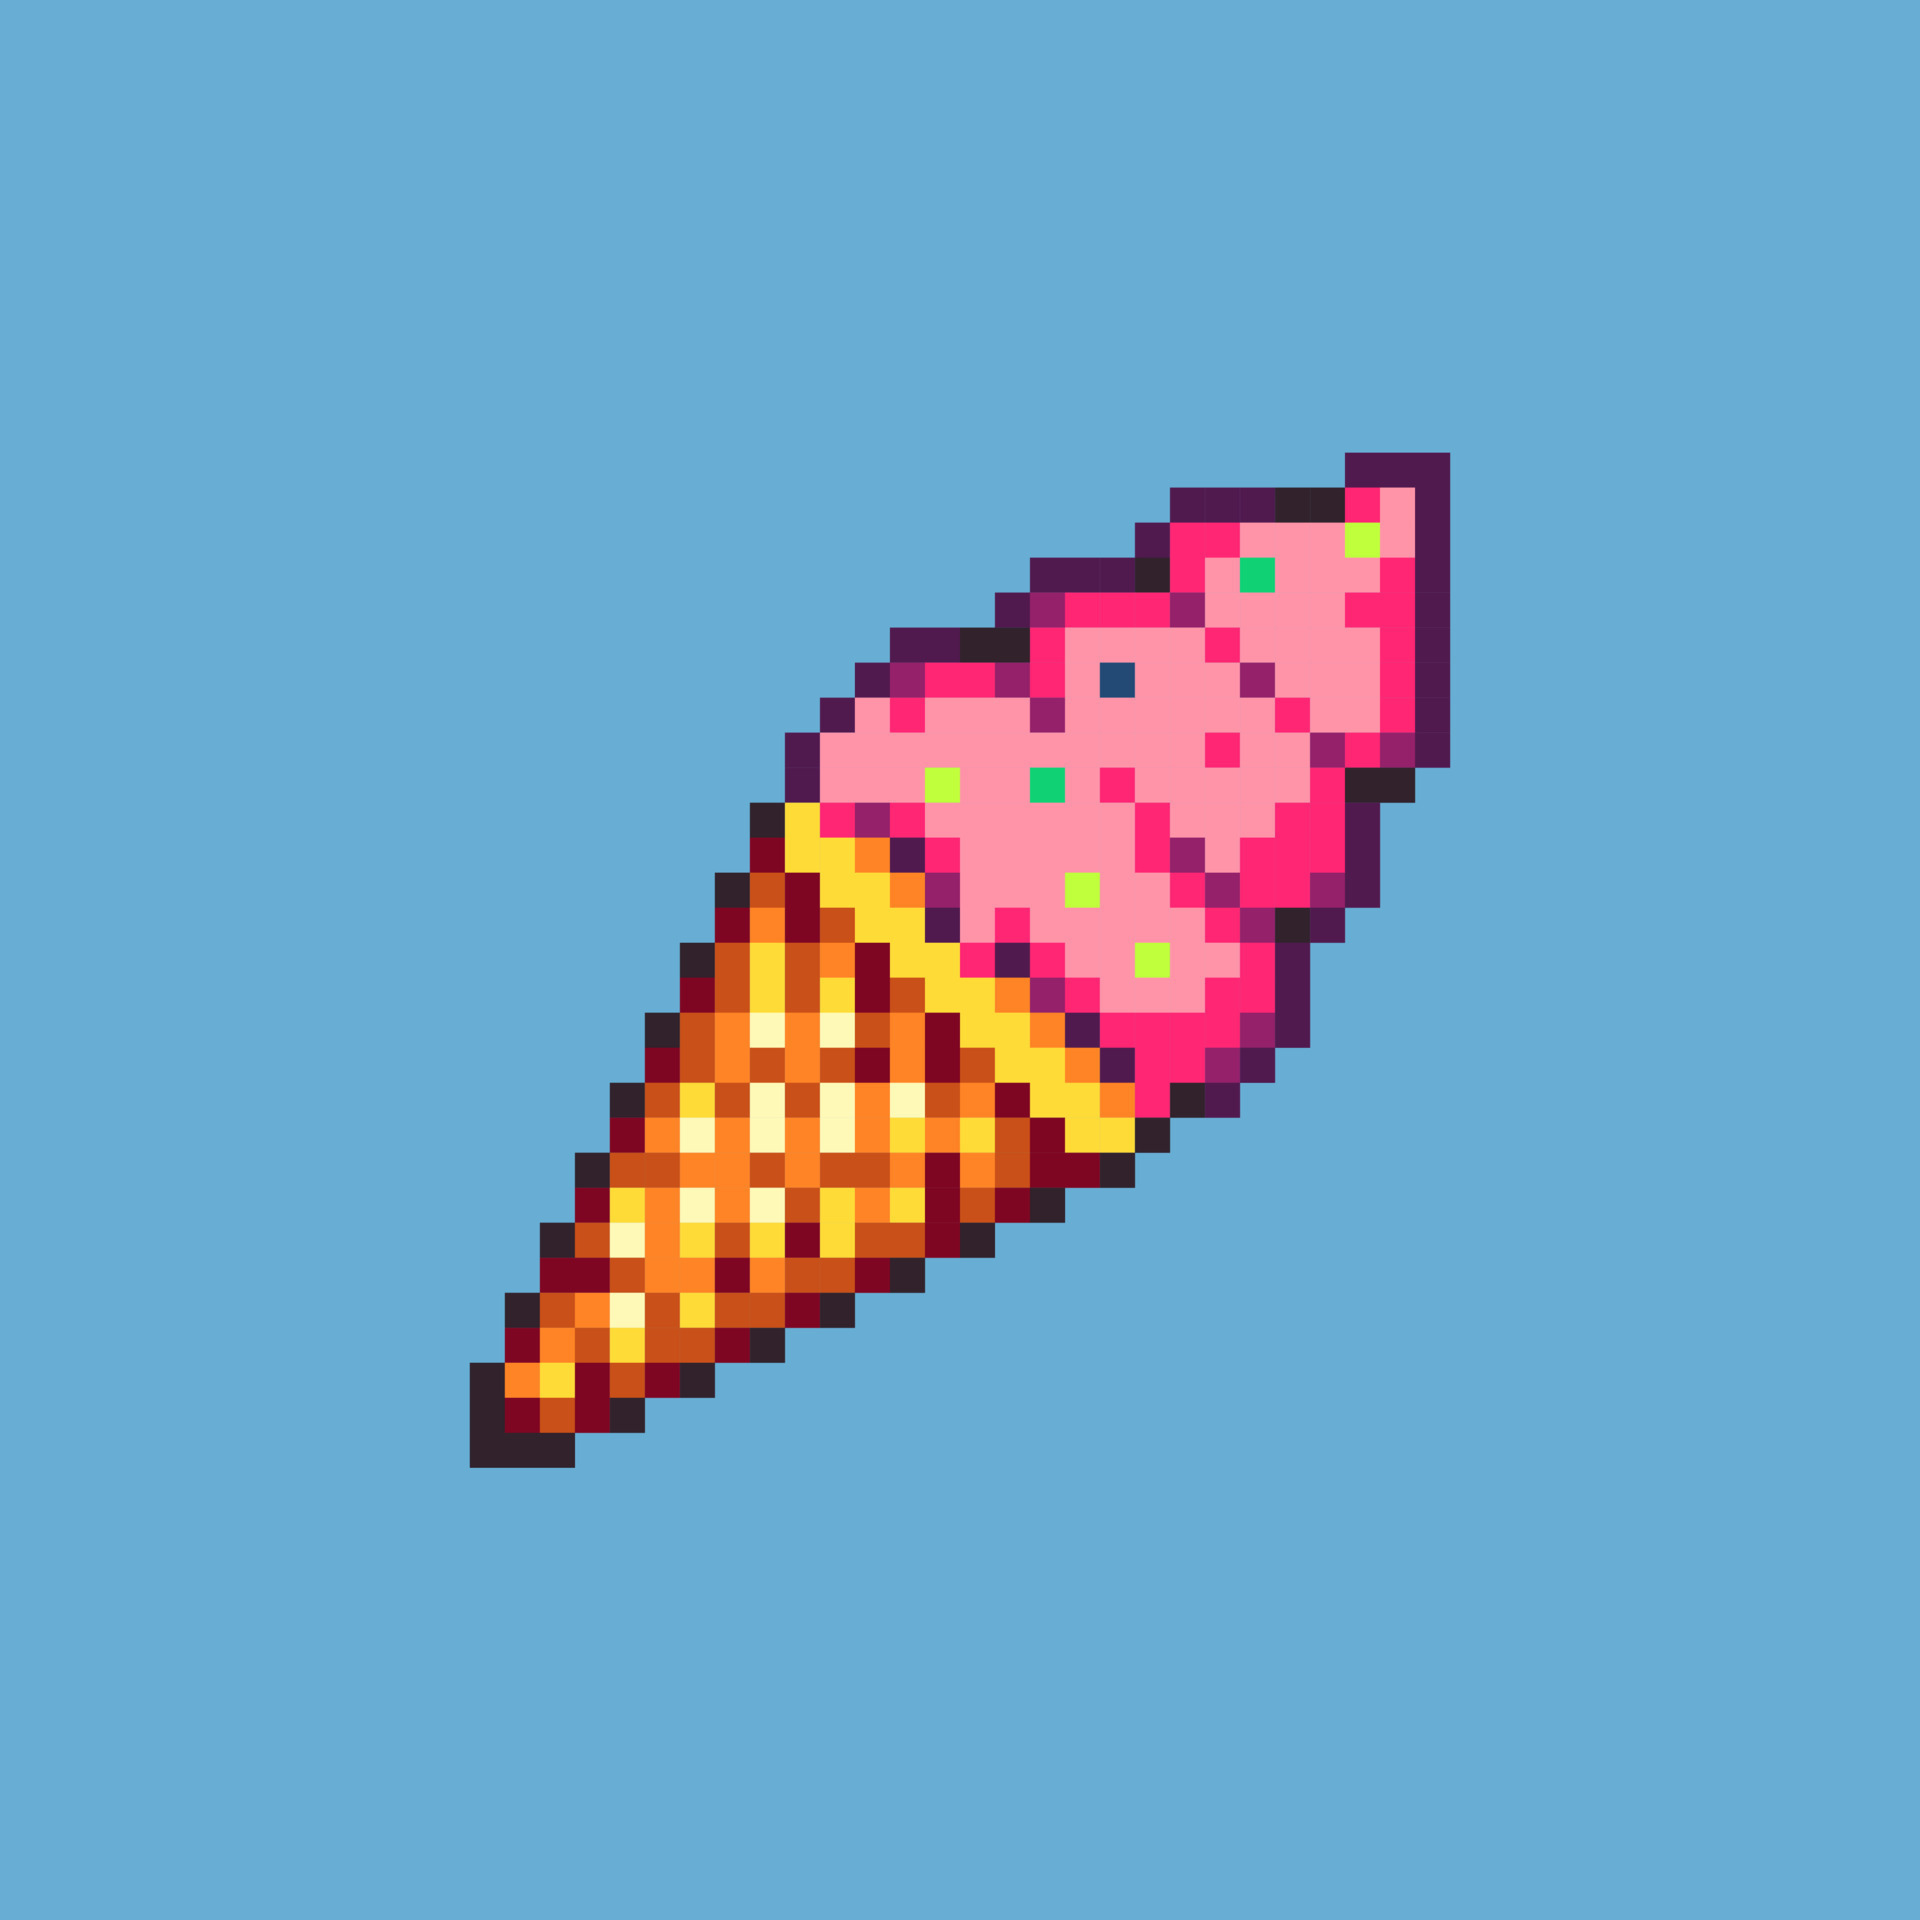 Ice Cream Pixel Art 8 Bit Icecream Vector Illustration Stock